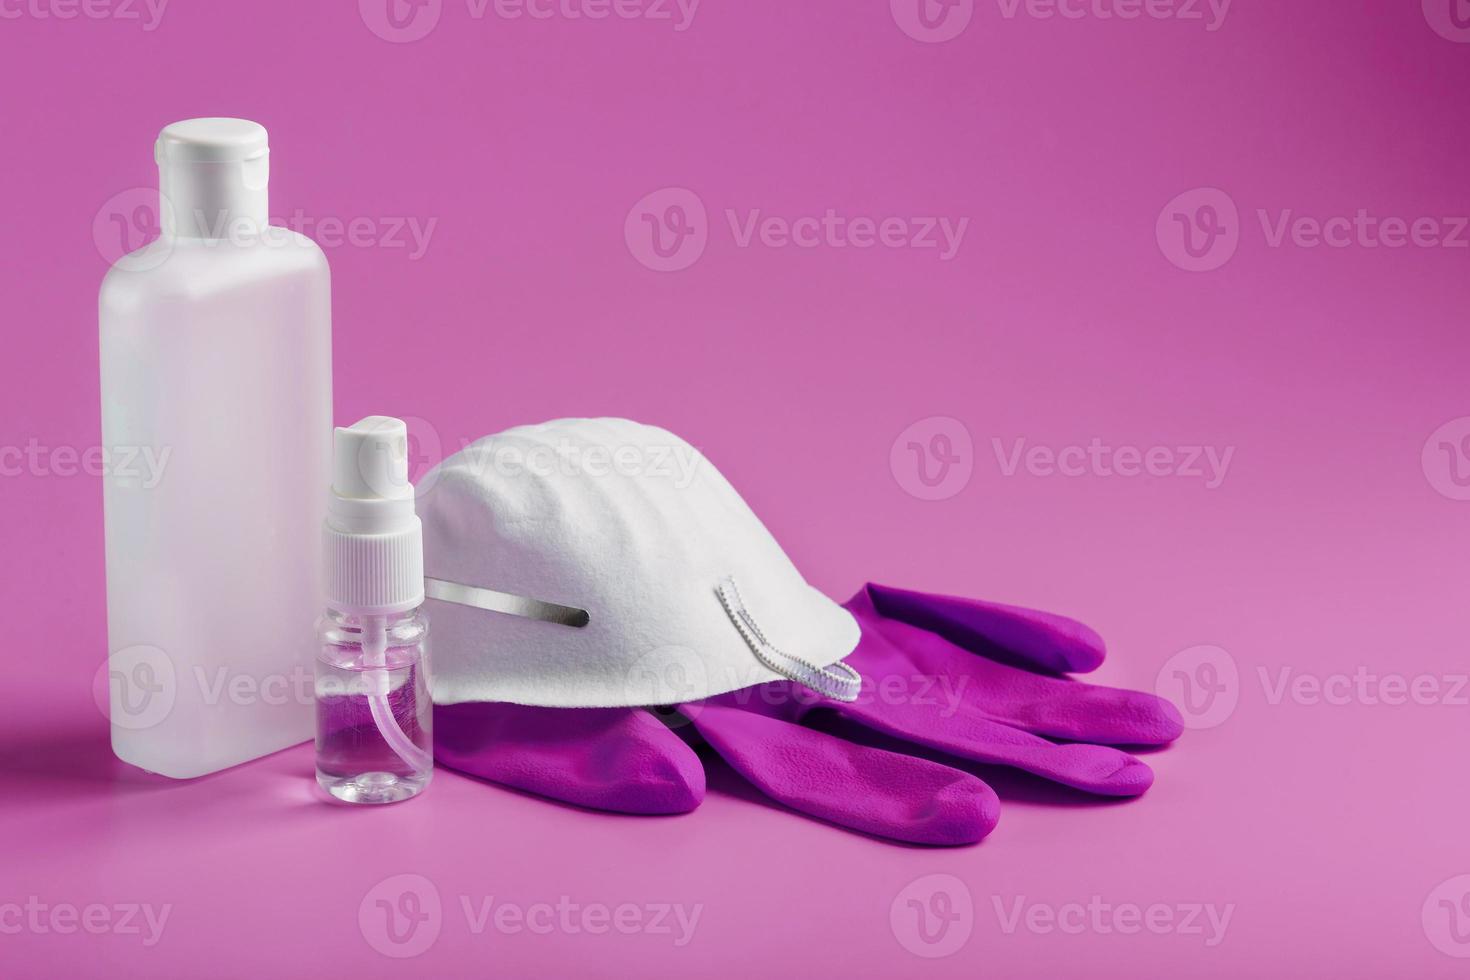 kit de protección antivirus sobre fondo rosa, máscara, guantes de goma, botellas de desinfectante para manos, gel antiséptico. aislar foto